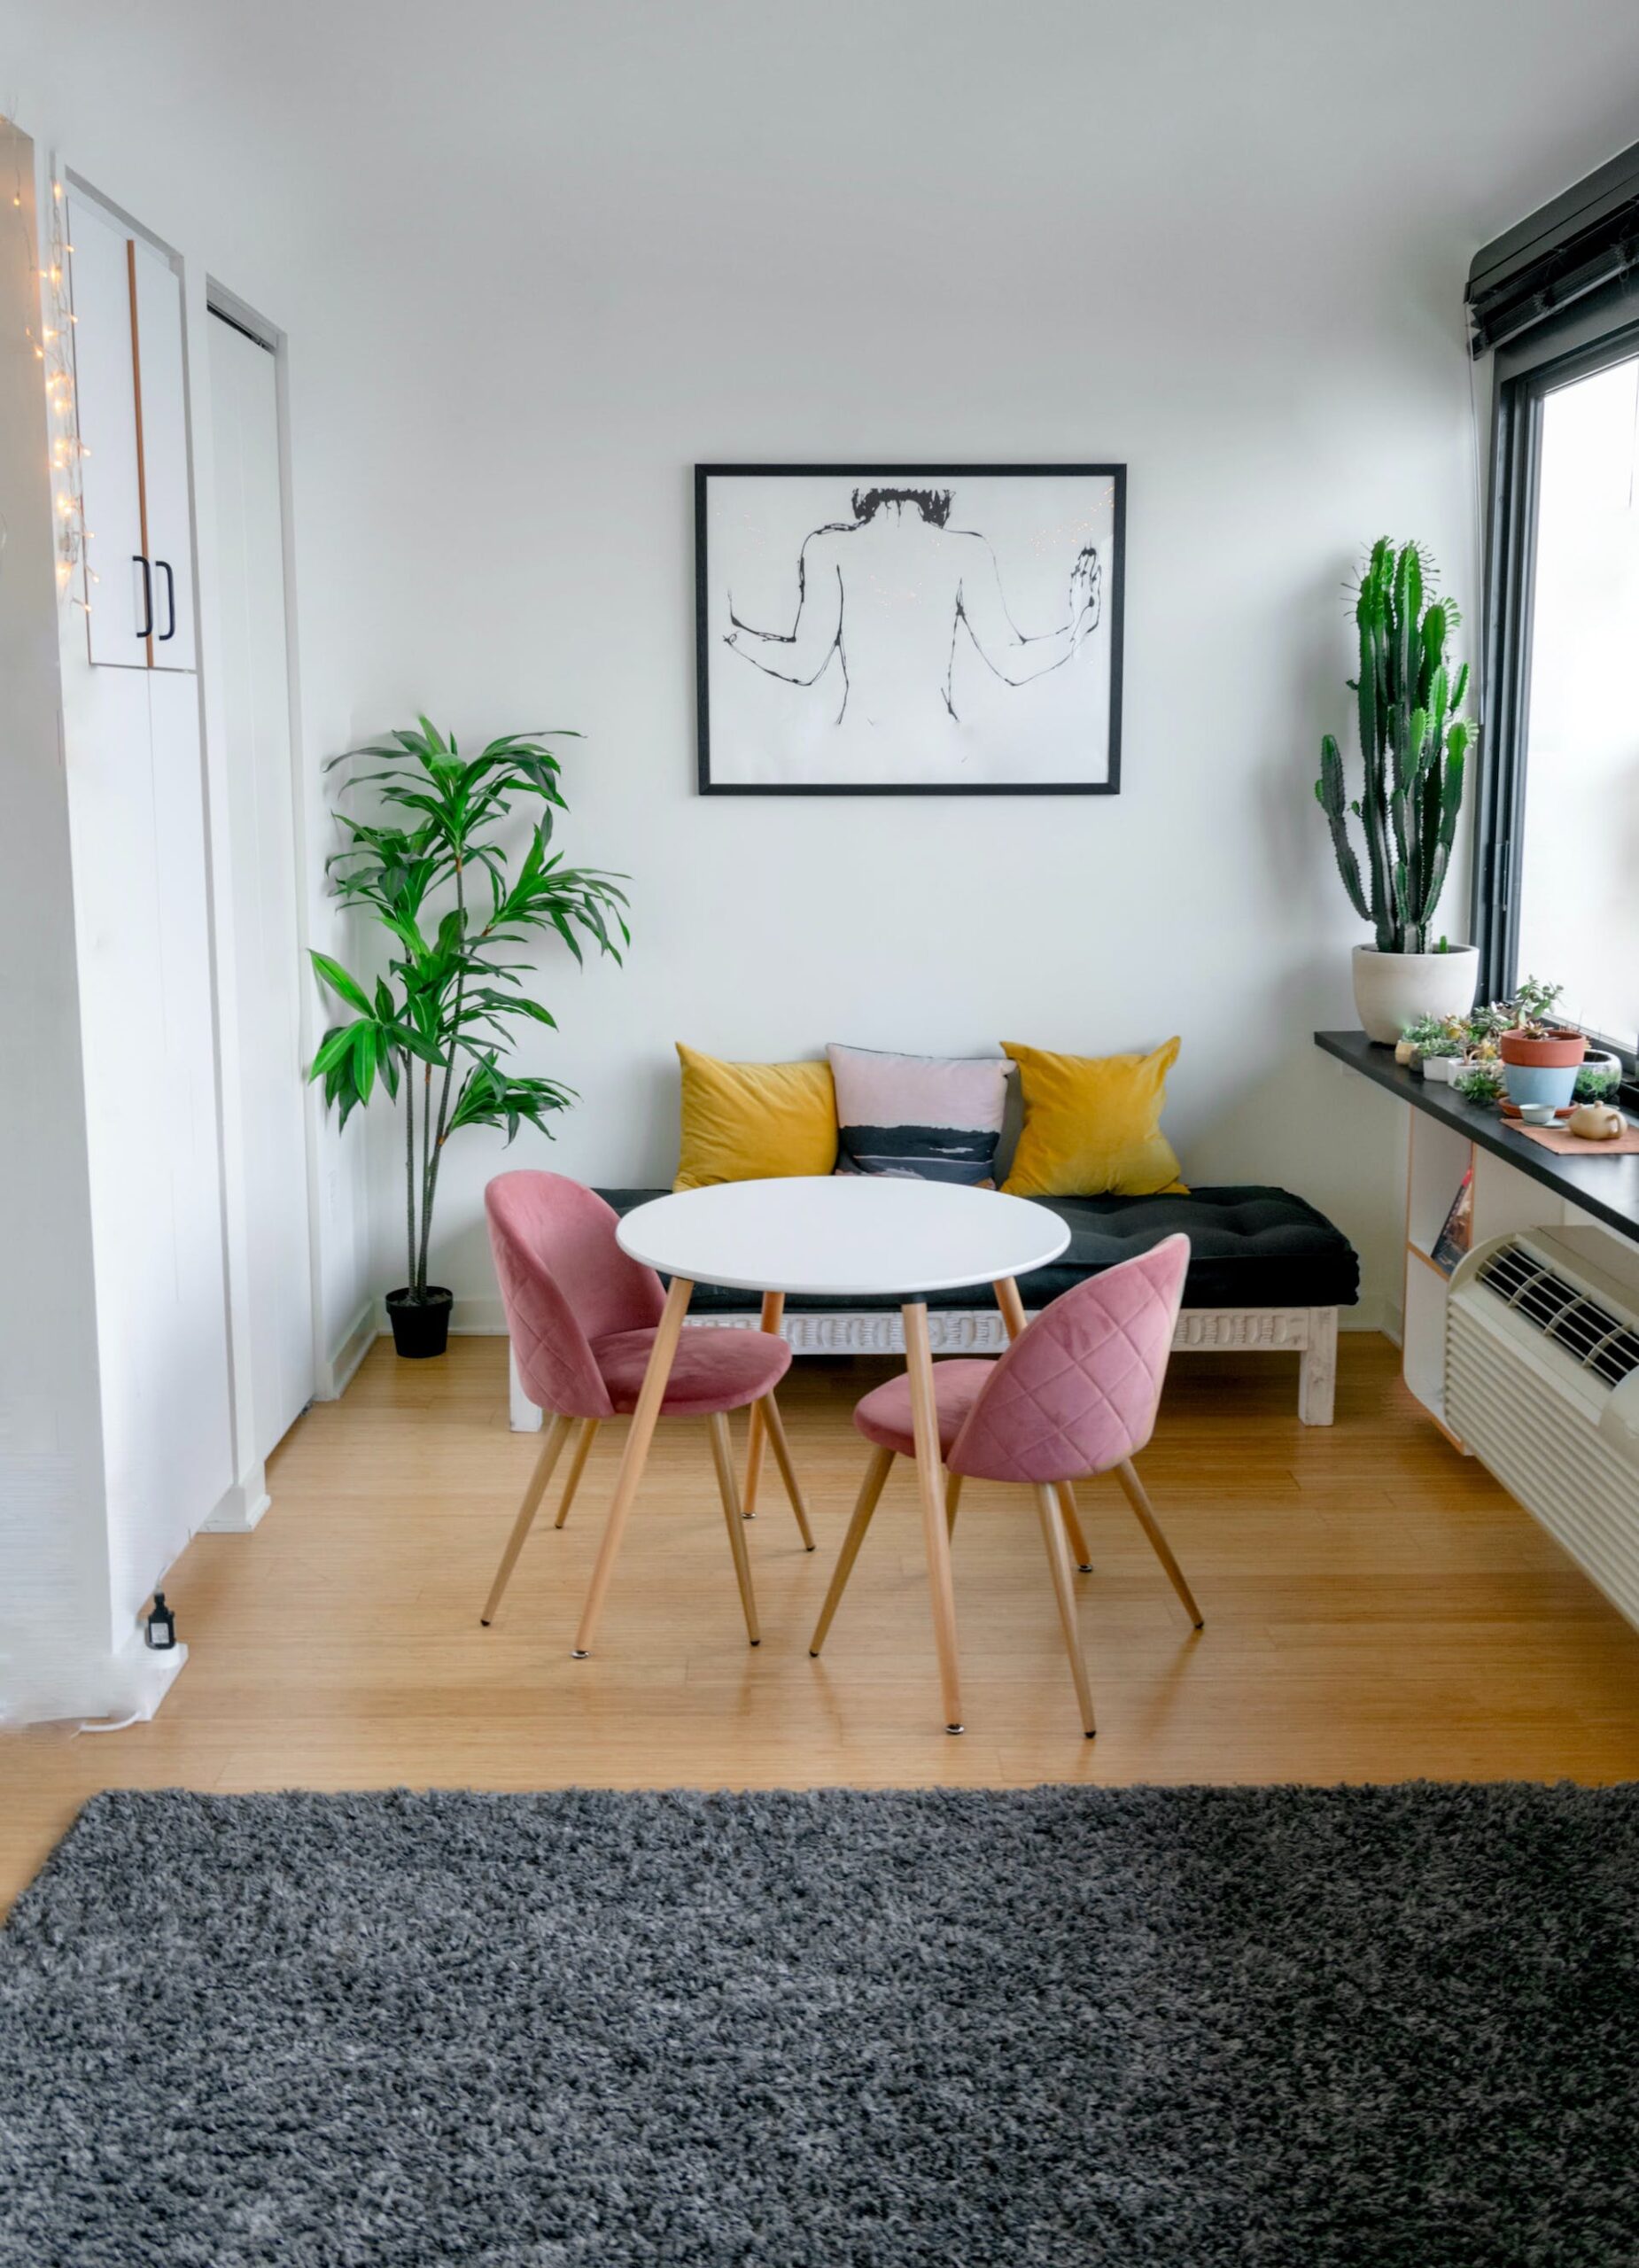 Cozy apartment | Source: Pexels